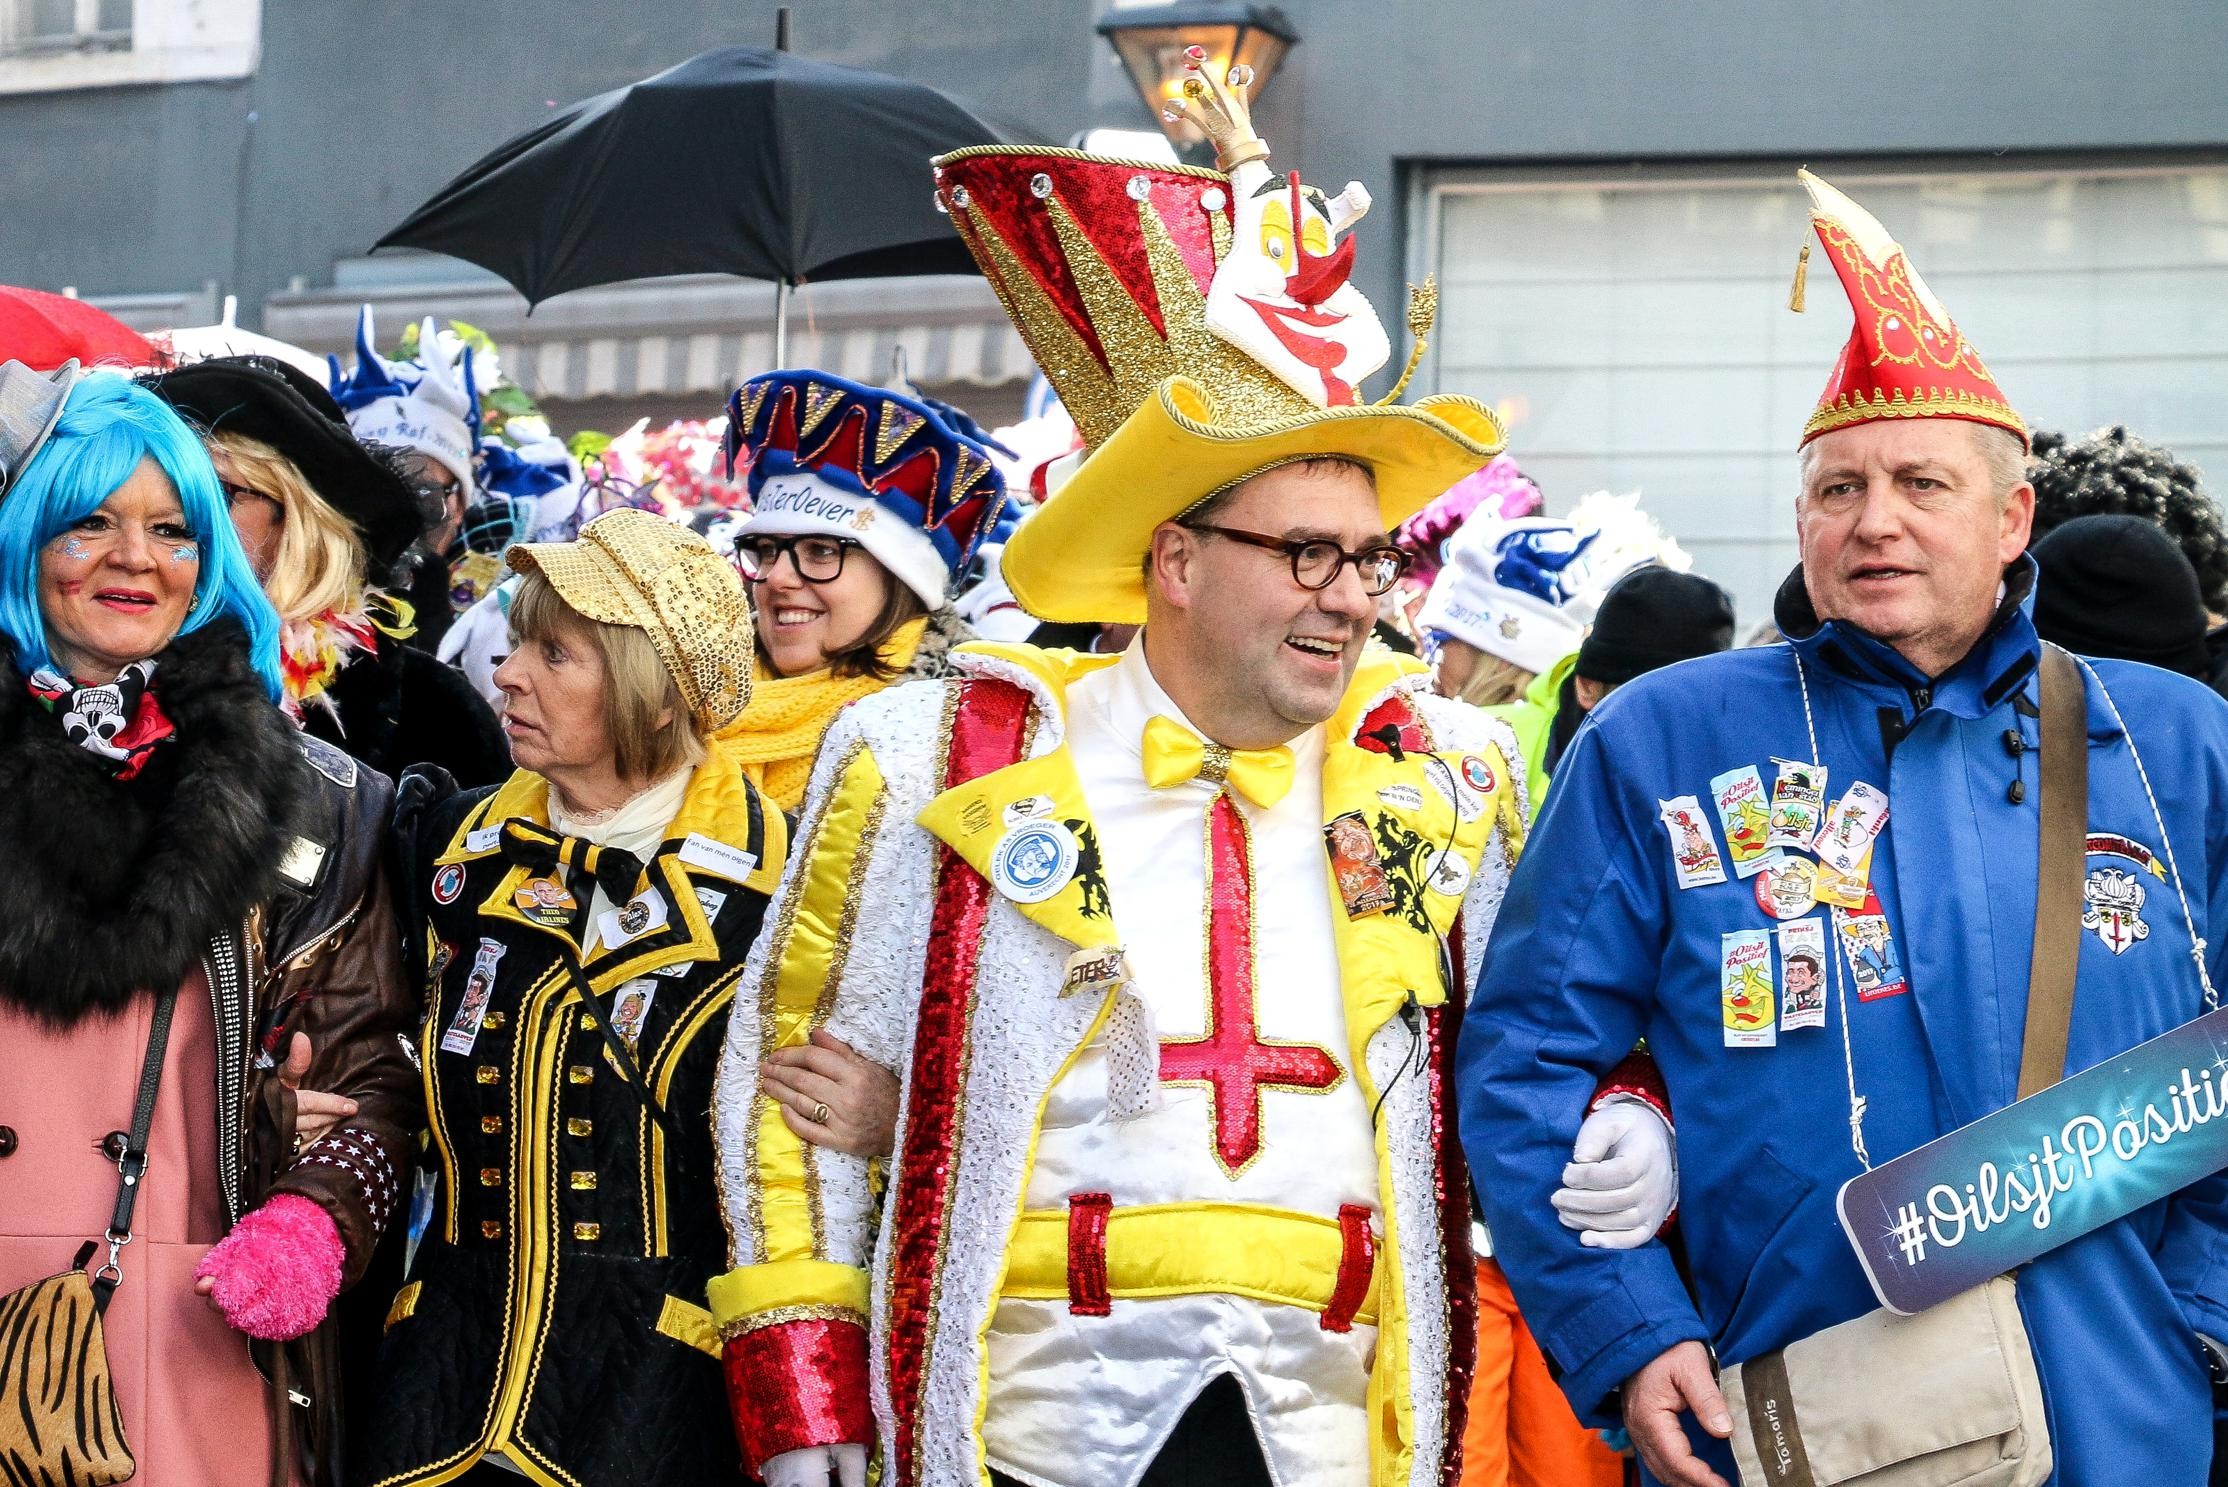 Voordracht buffet lint Breite Eule Umgebung hoed versieren carnaval Beschränkung schwierig  Aufbrauchen